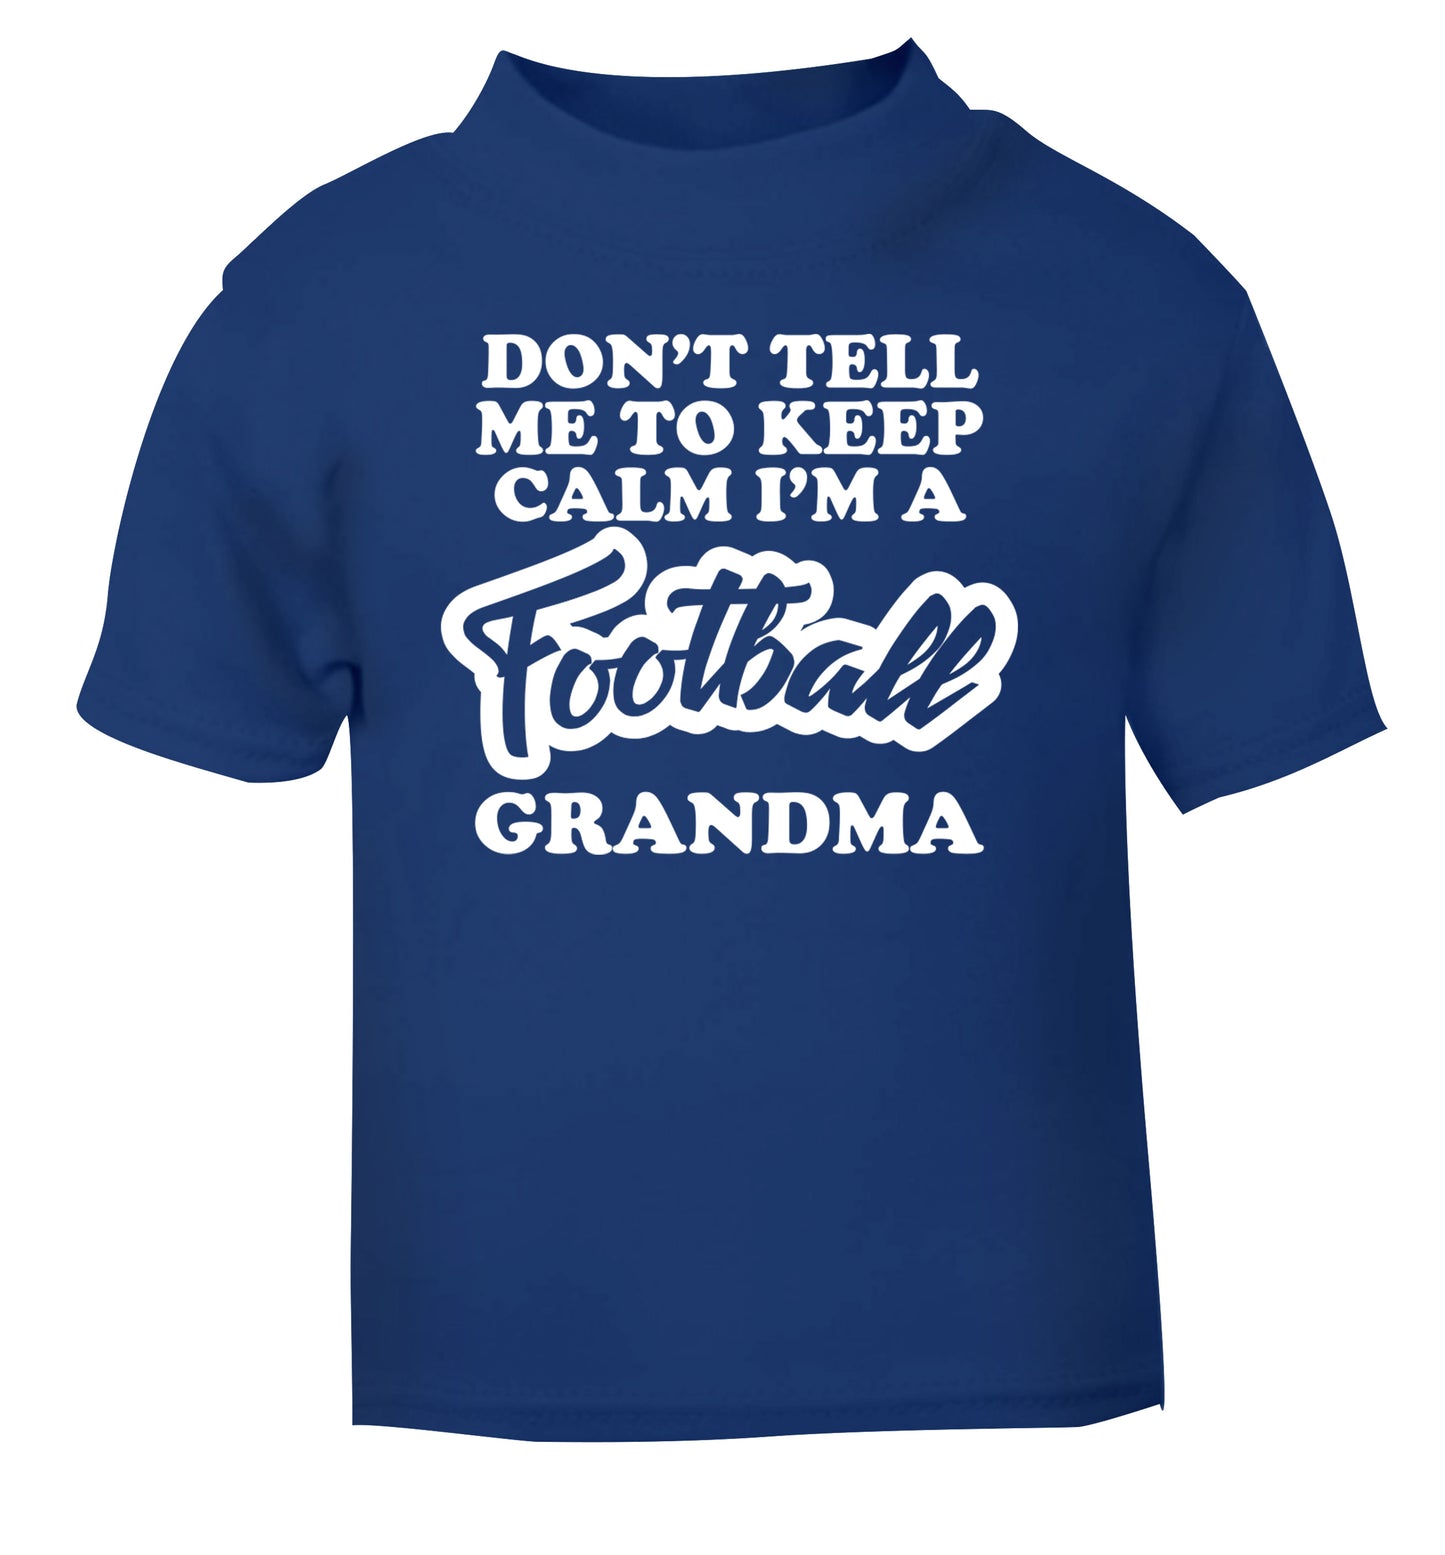 Don't tell me to keep calm I'm a football grandma blue Baby Toddler Tshirt 2 Years